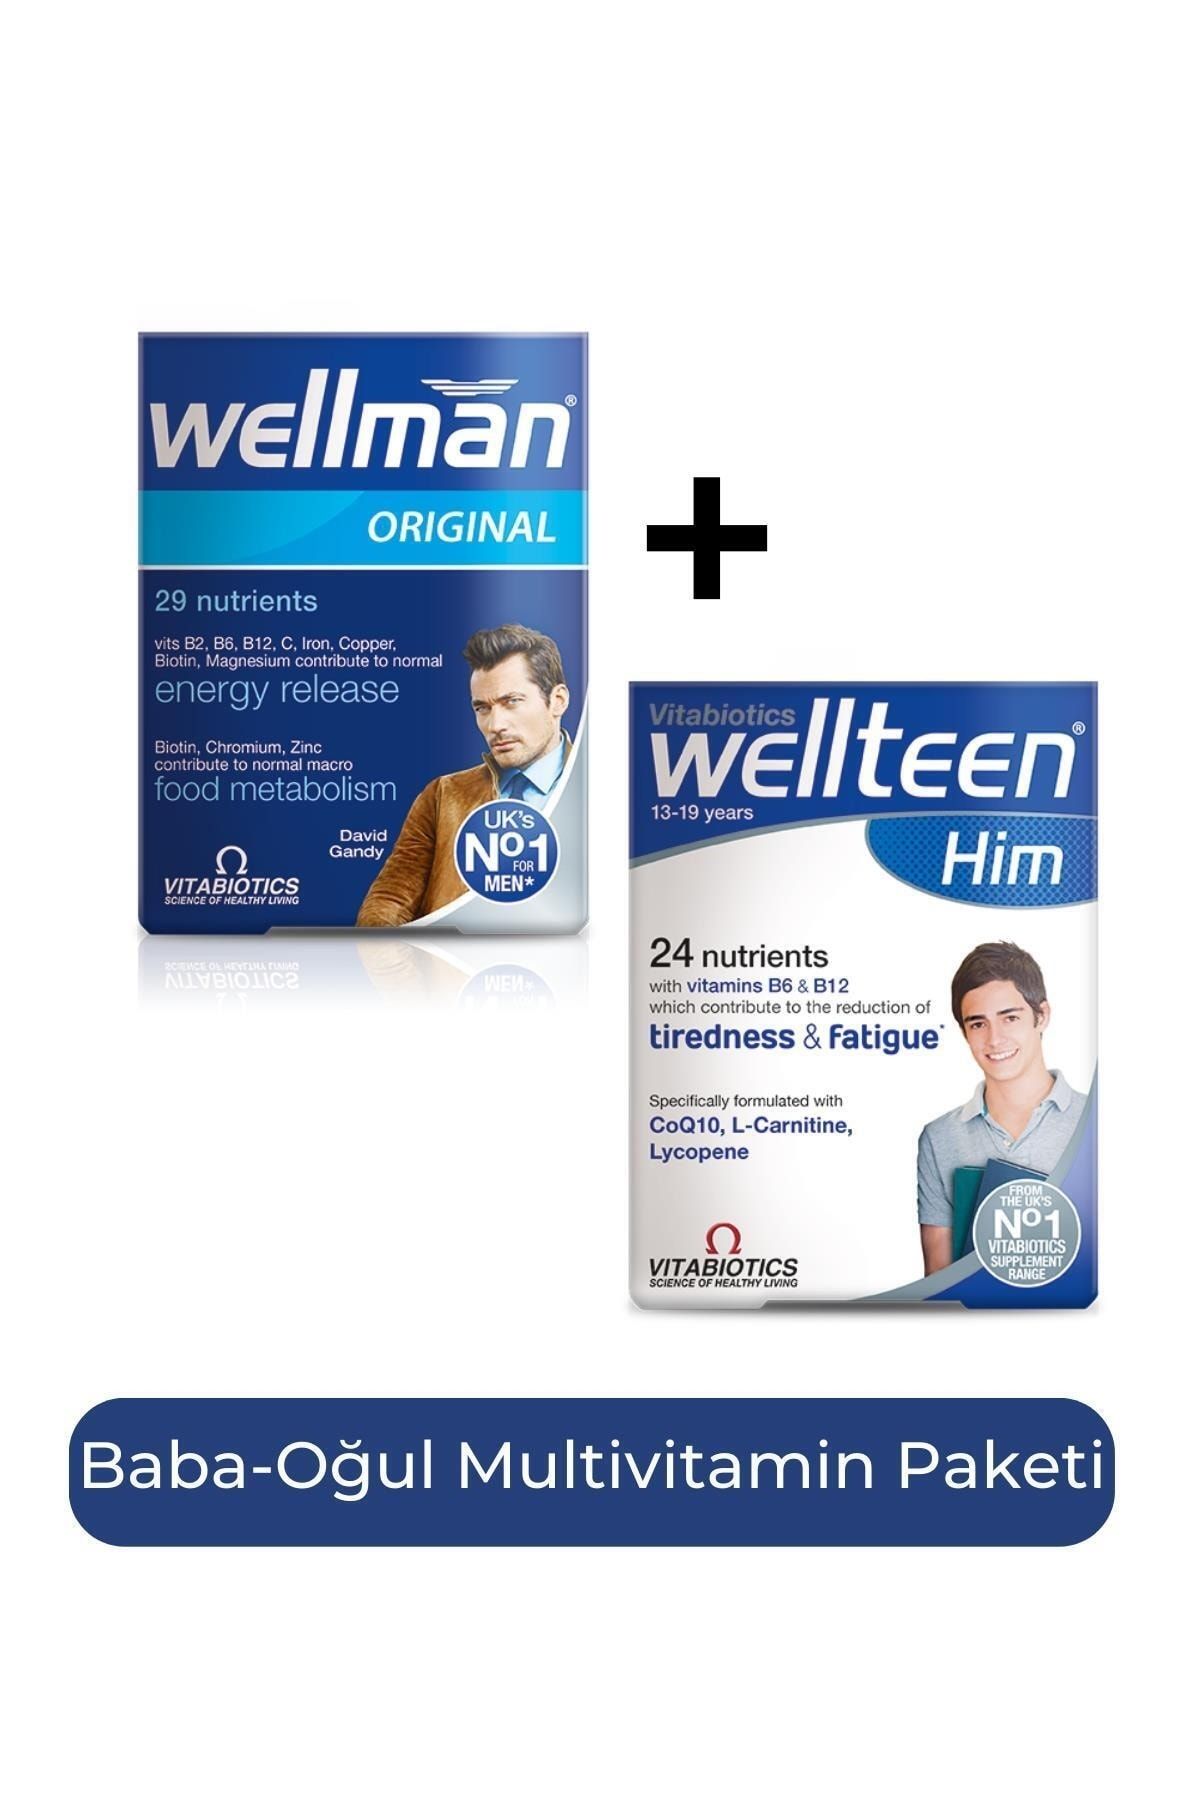 Wellman Wellteen Him Baba-oğul Multivitamin